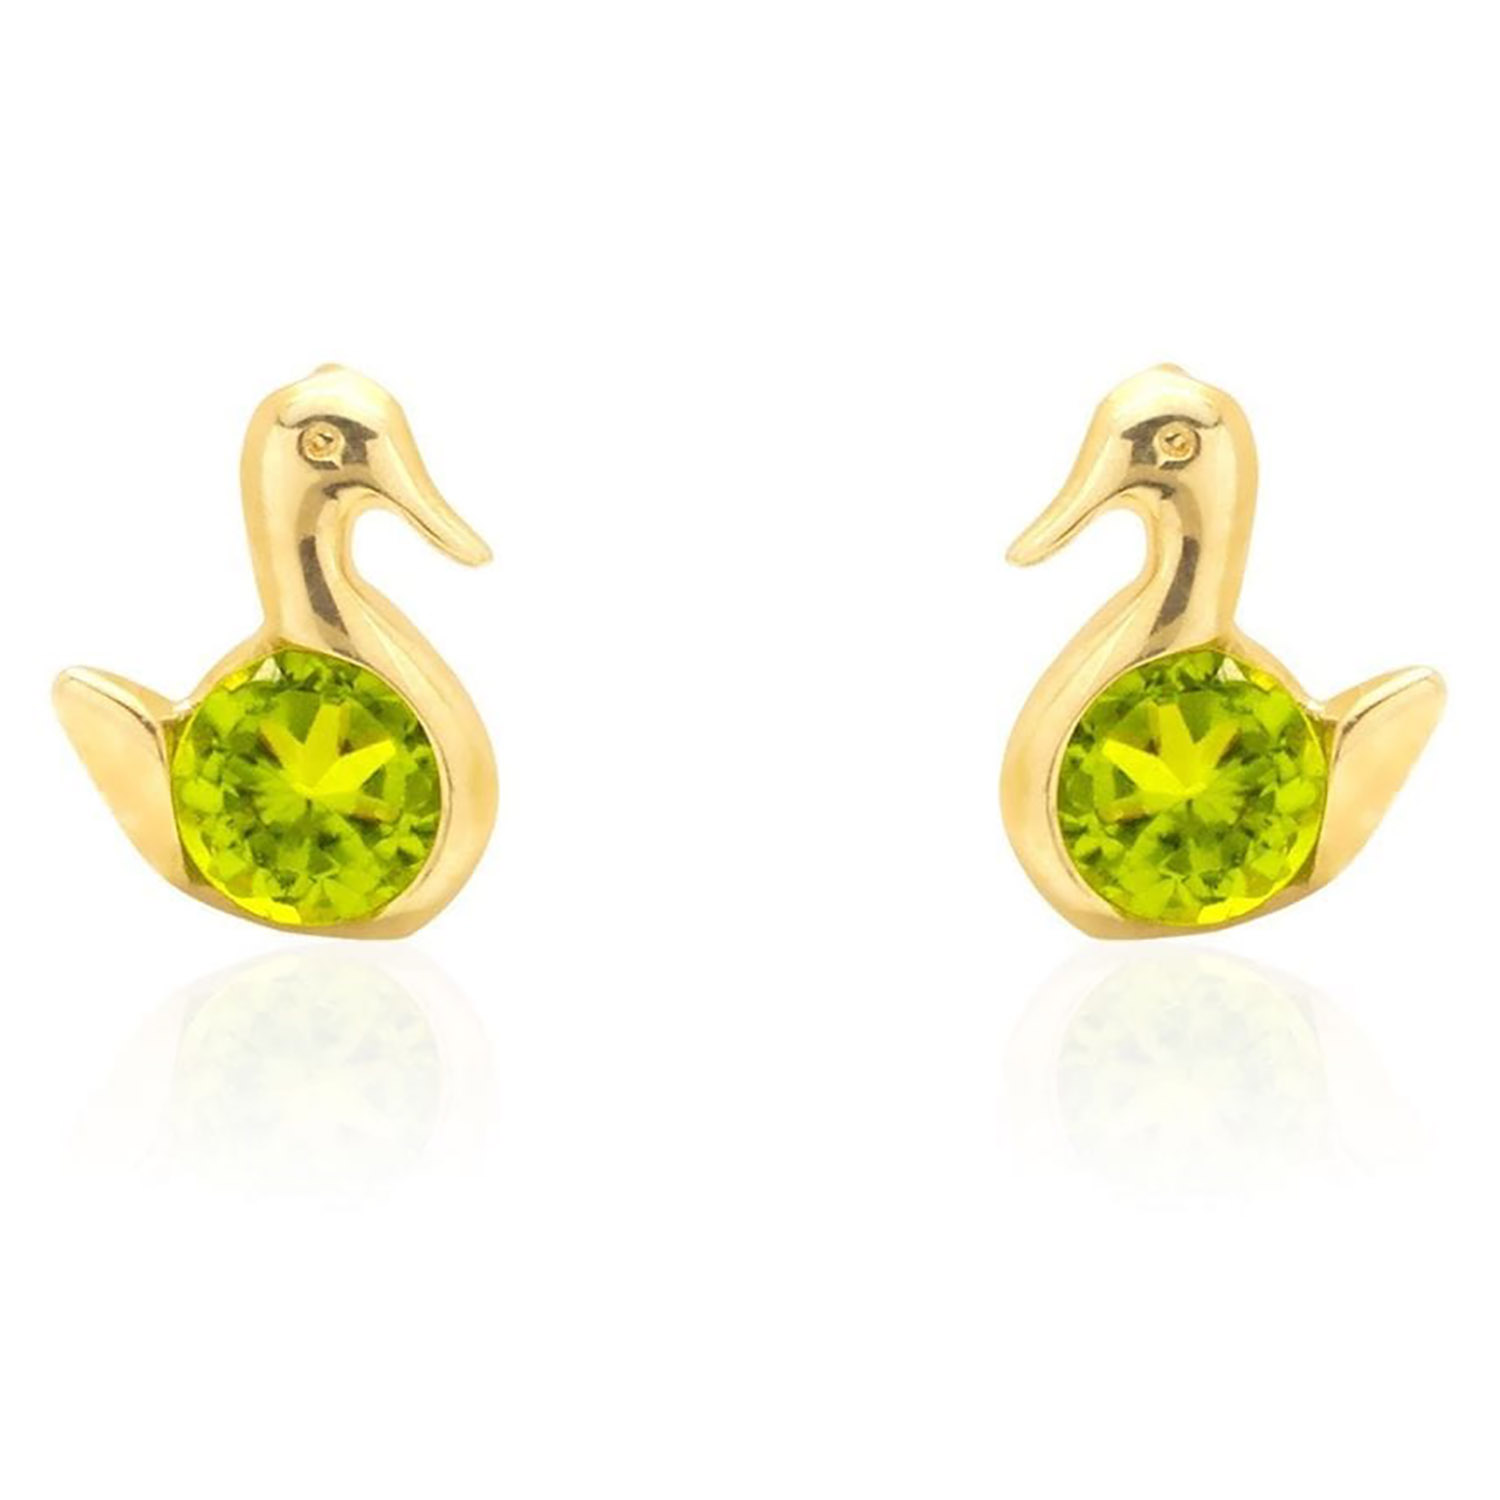 14K Yellow Gold Round Cut Simulated Birthstone Duck Baby Screwback Stud Earrings - August - Peridot